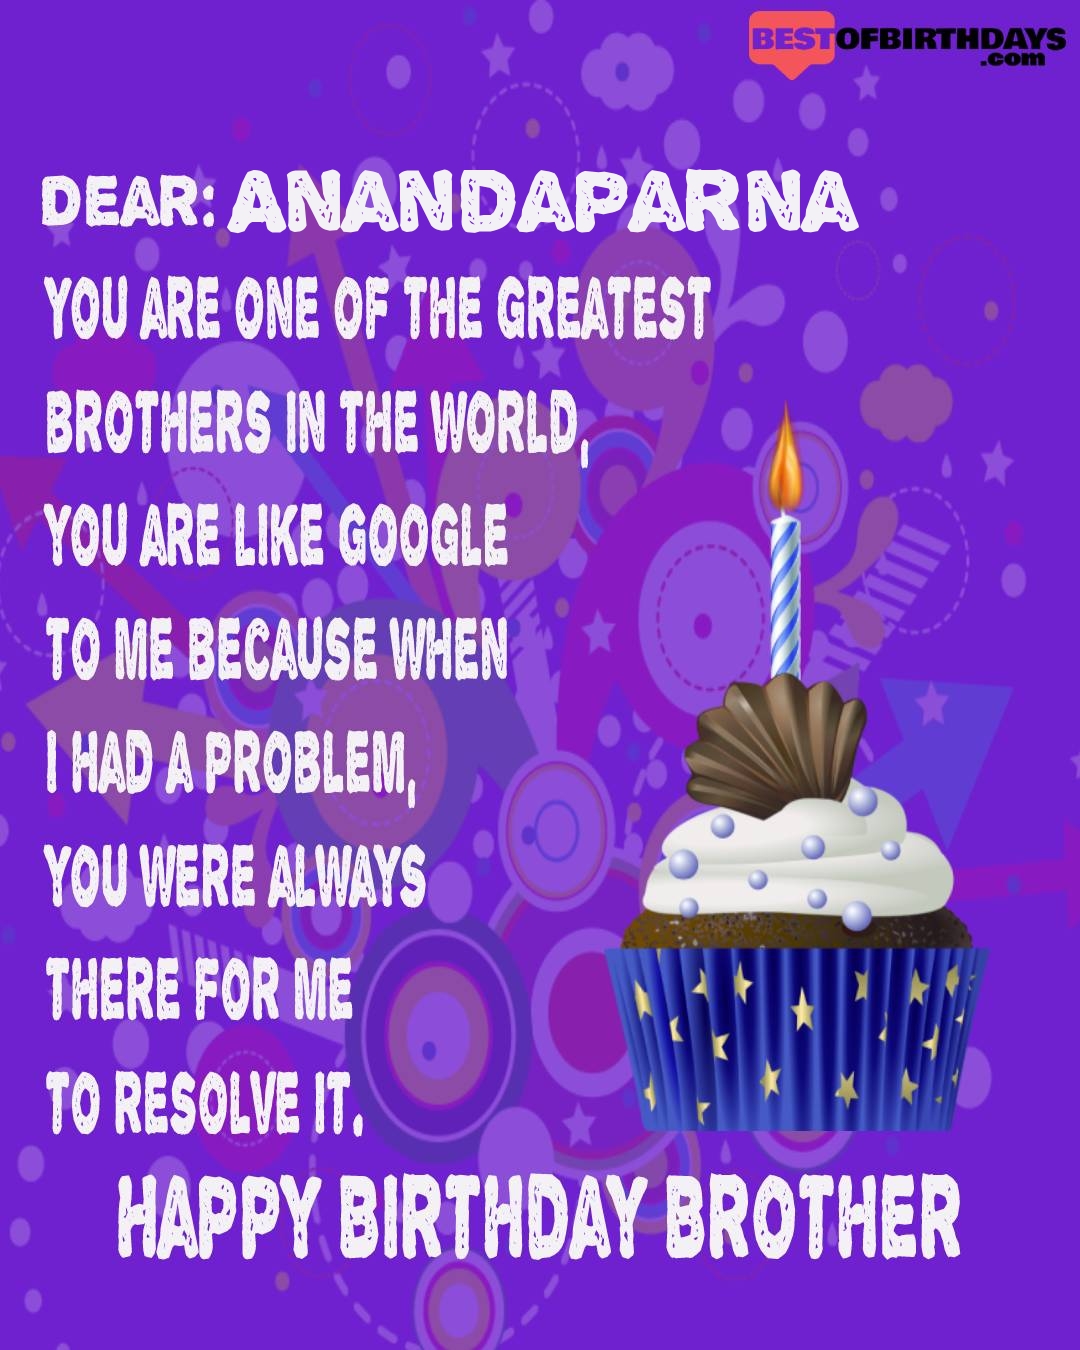 Happy birthday anandaparna bhai brother bro